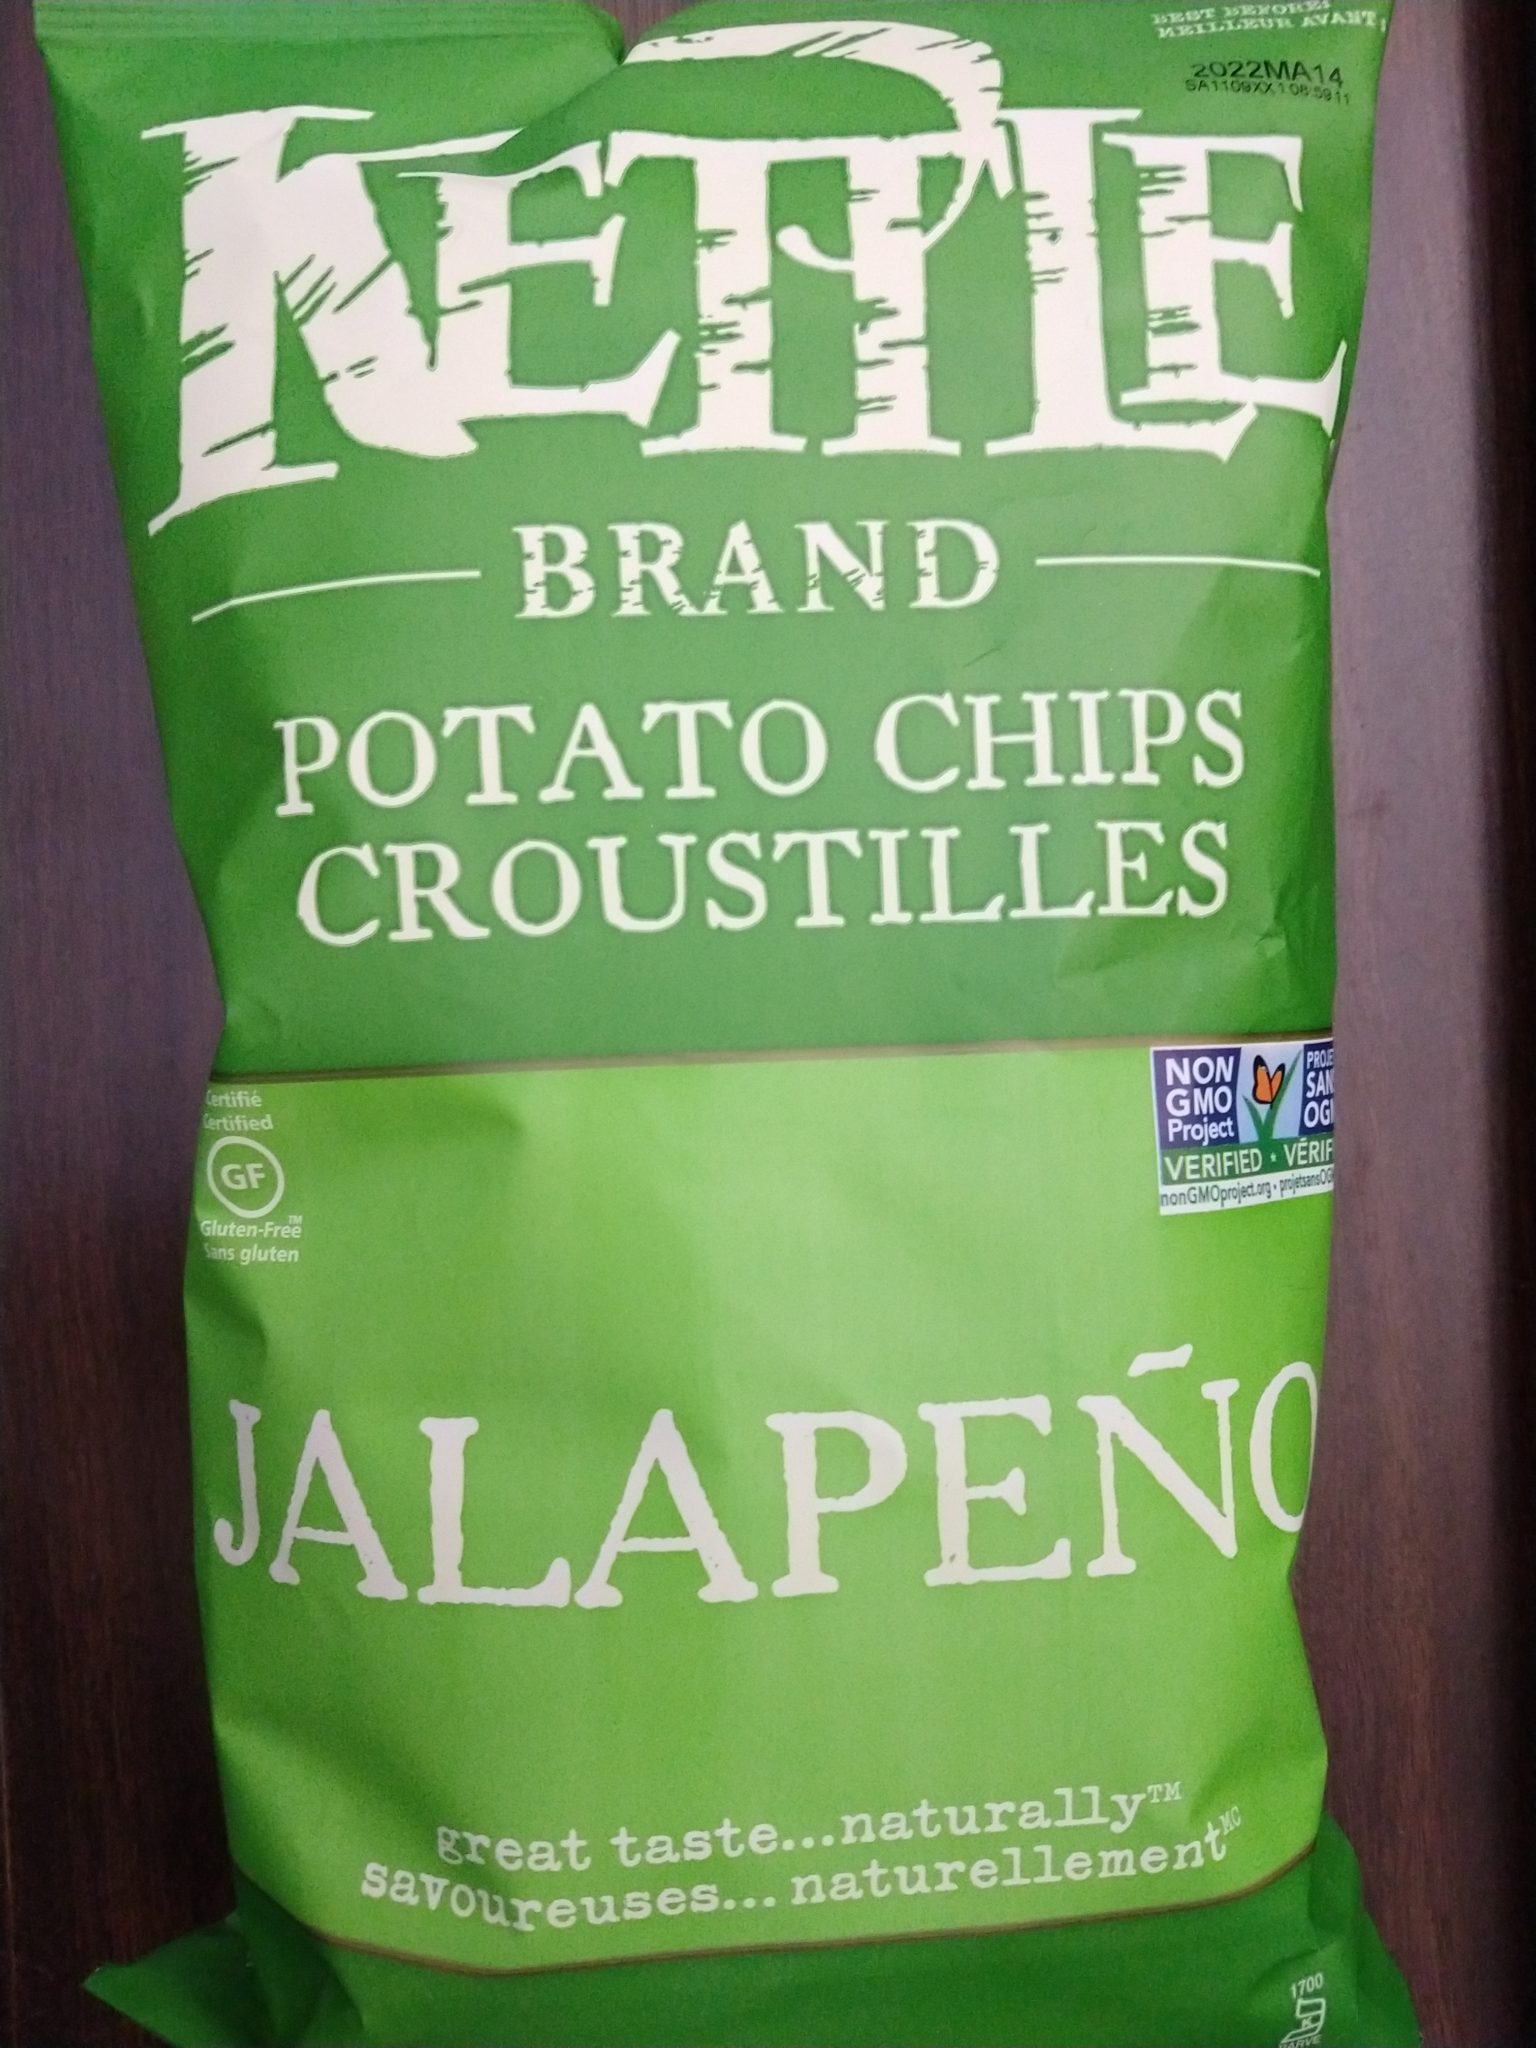 Kettle Brand – Jalapeno Potato Chips